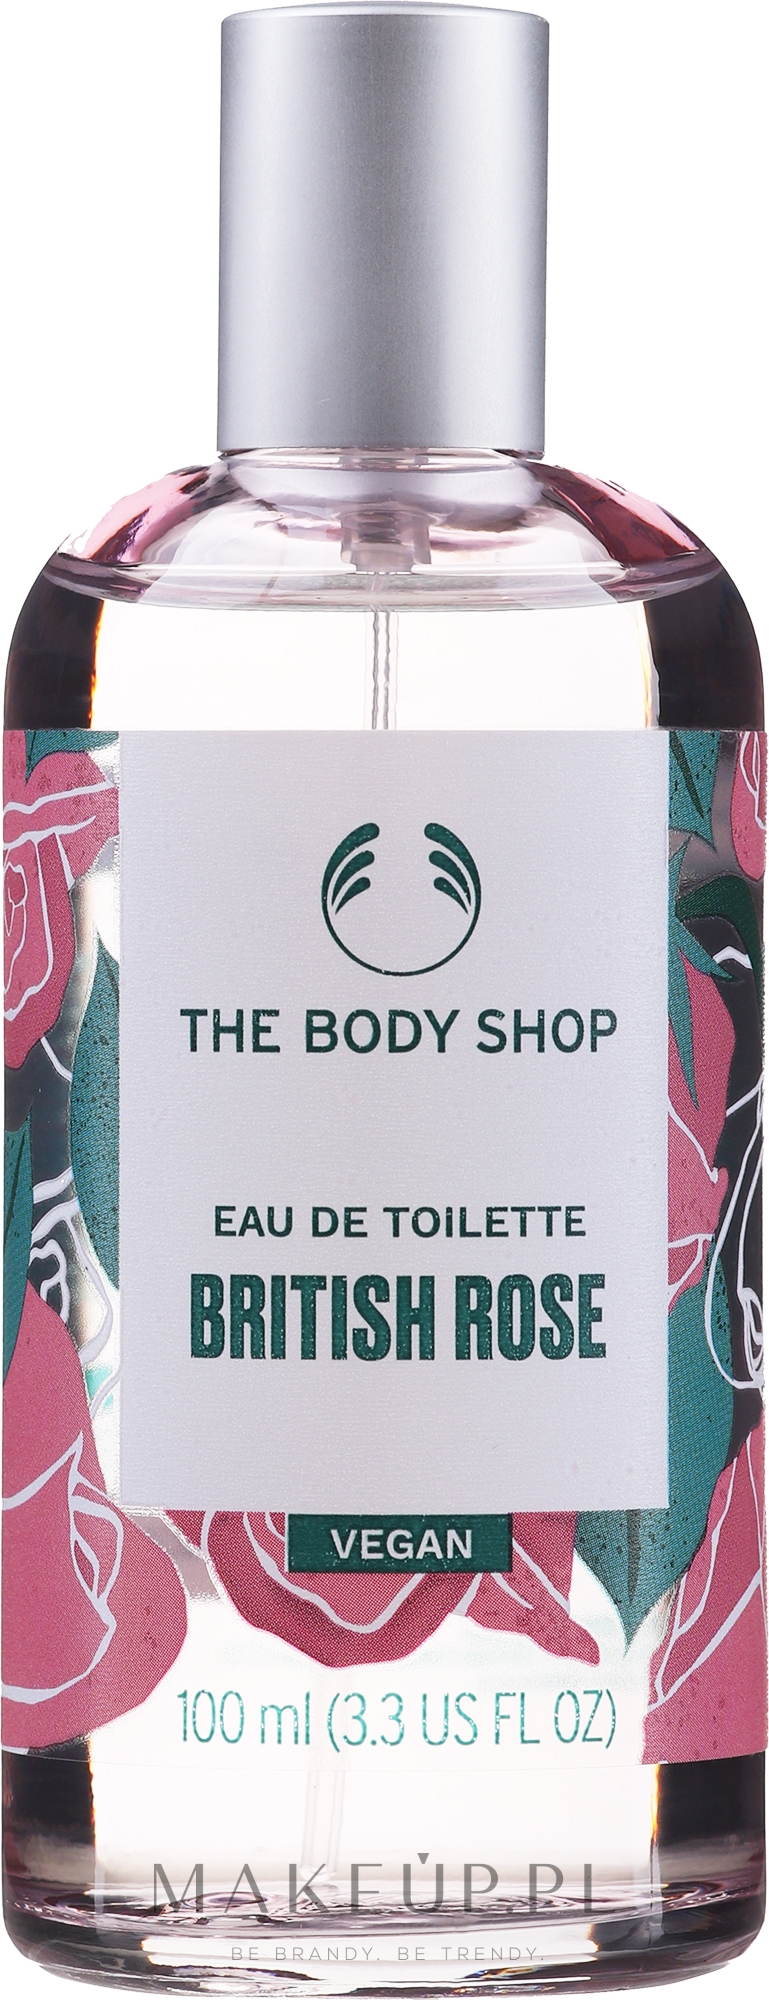 the body shop british rose